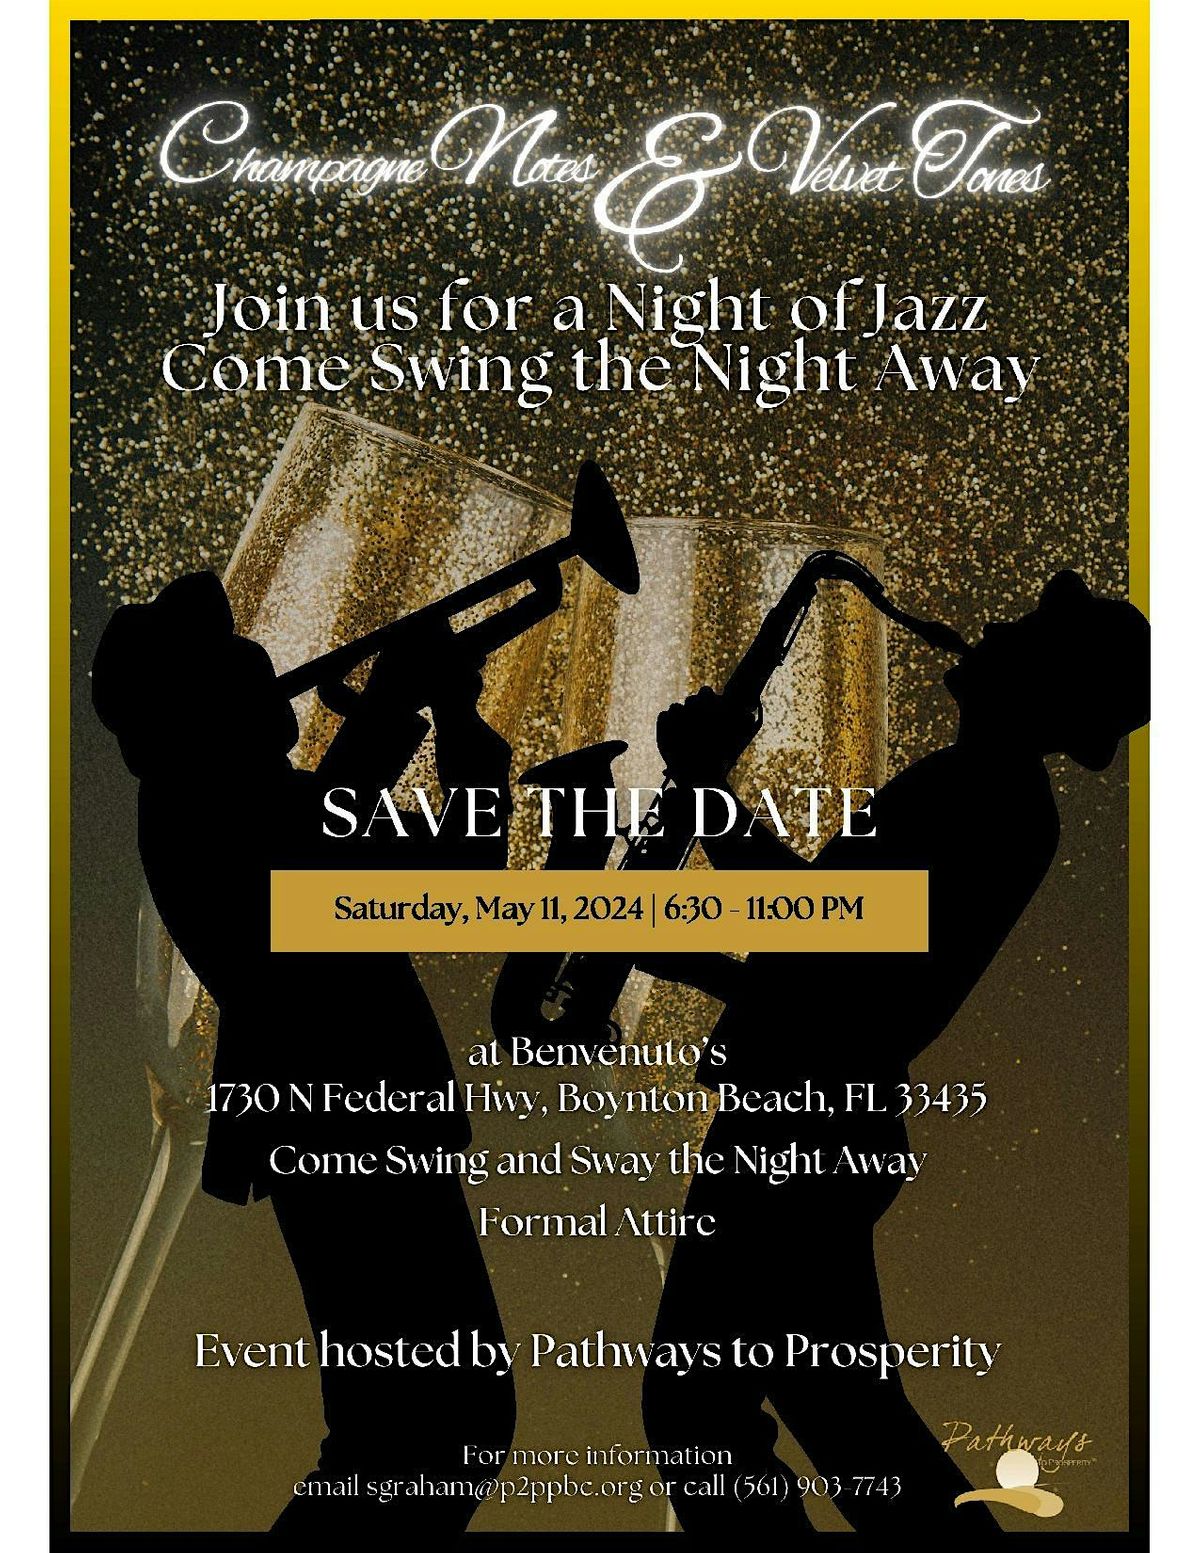 Champagne Notes & Velvet Tones - A Night of Jazz Fundraiser